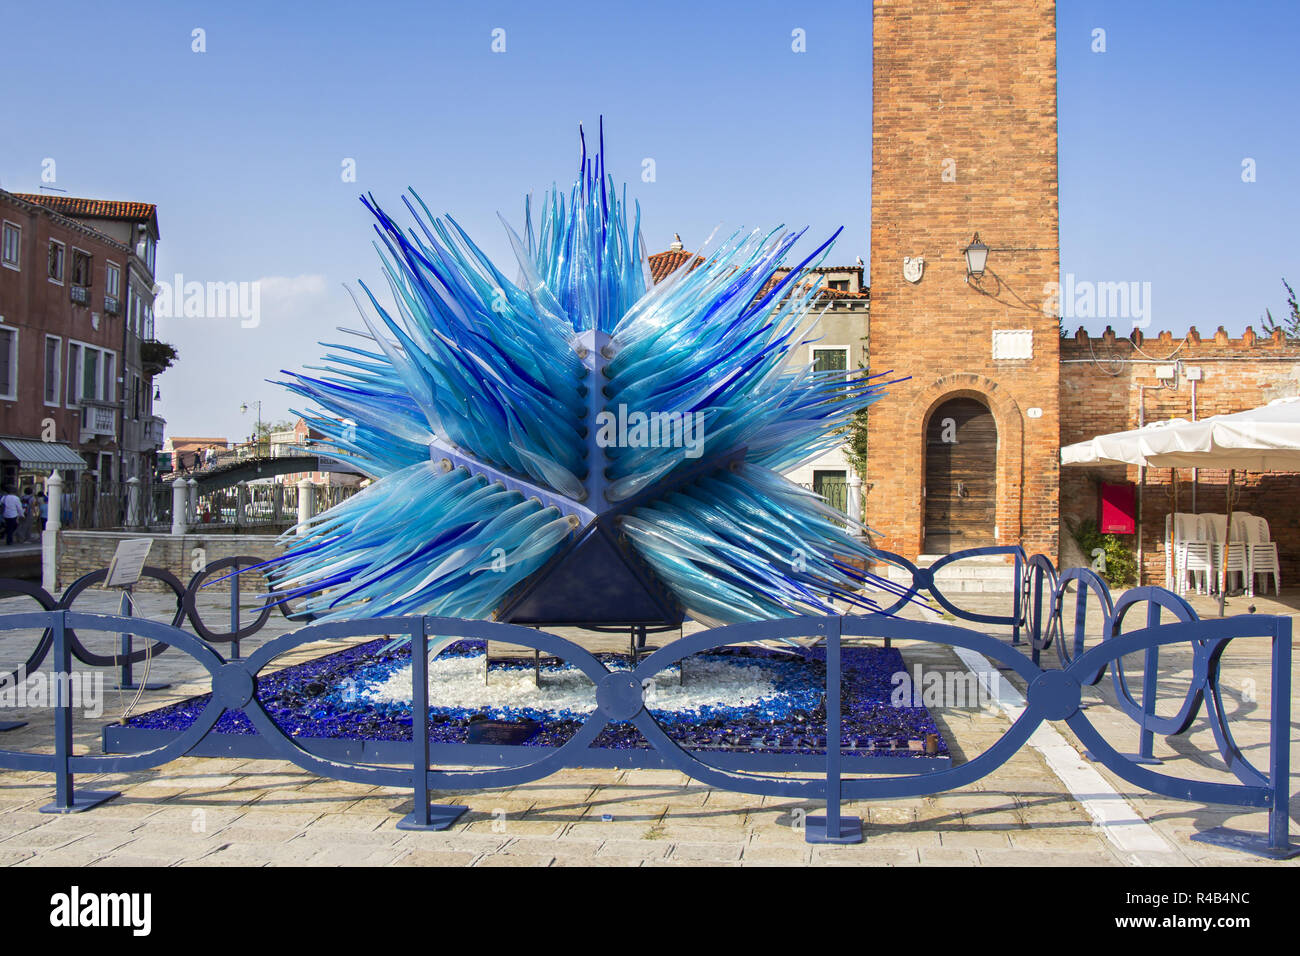 Die Insel Murano, Venedig, Italien - 23 September: Blau Skulptur aus Murano Glas am Campo San Stefano Platz in Murano am 23. September 2018. Stockfoto